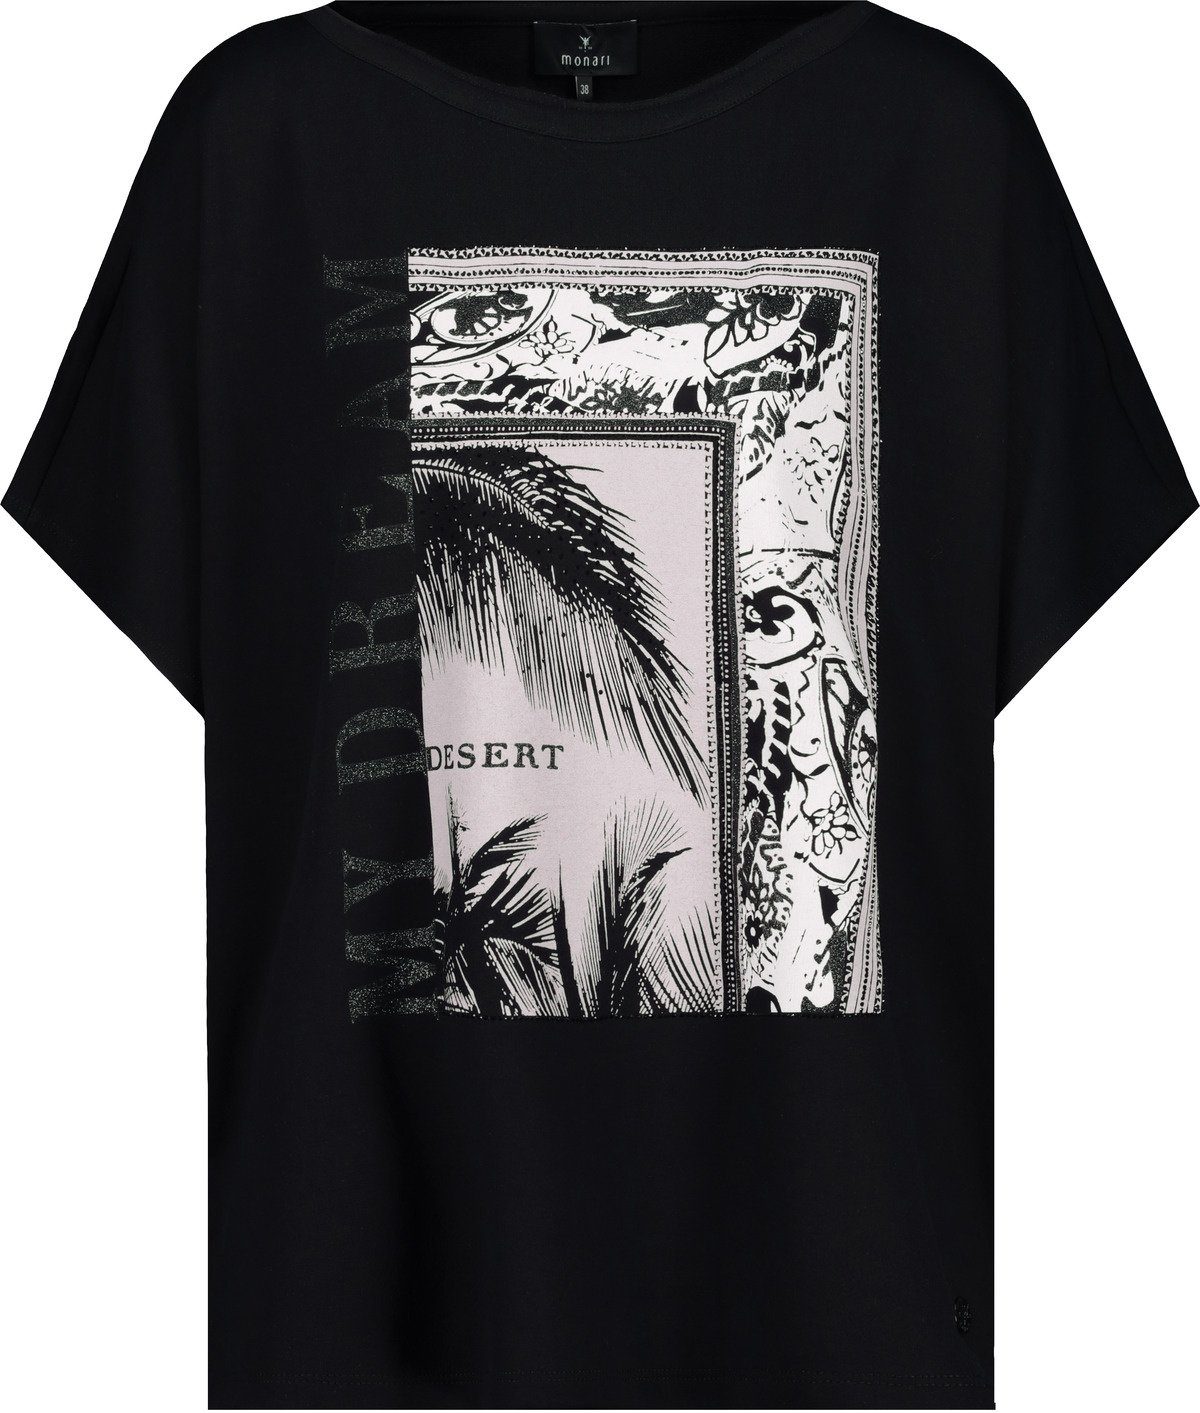 Monari T-Shirt Shirt mit T Paisley Muster schwarz